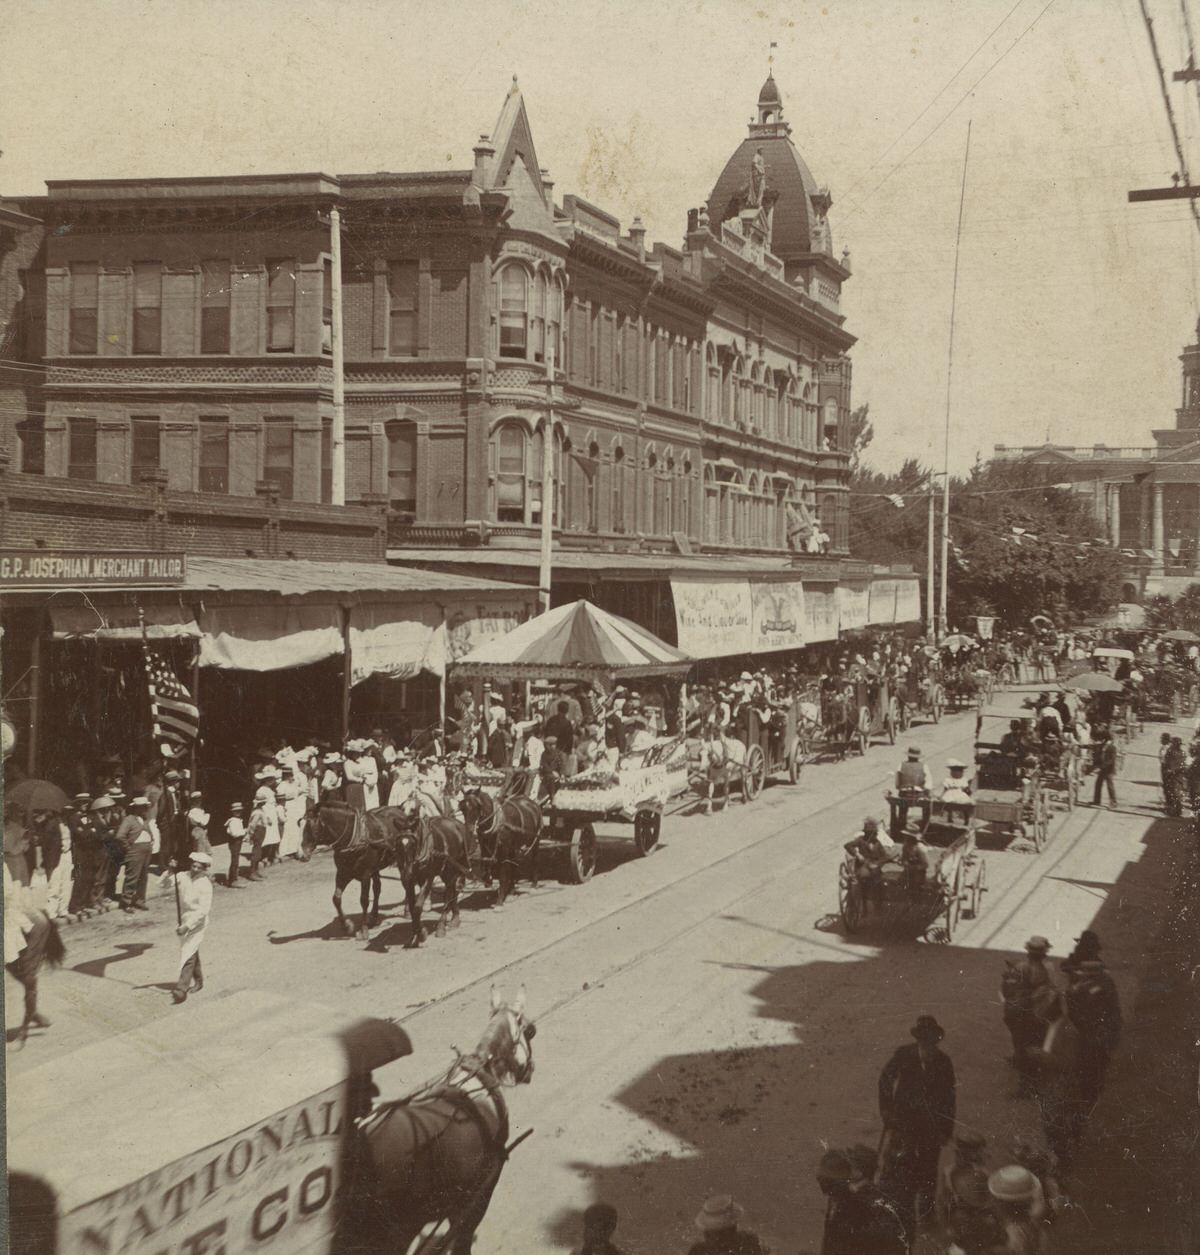 J & Mariposa St. Fresno Cal. No. 20, 1890